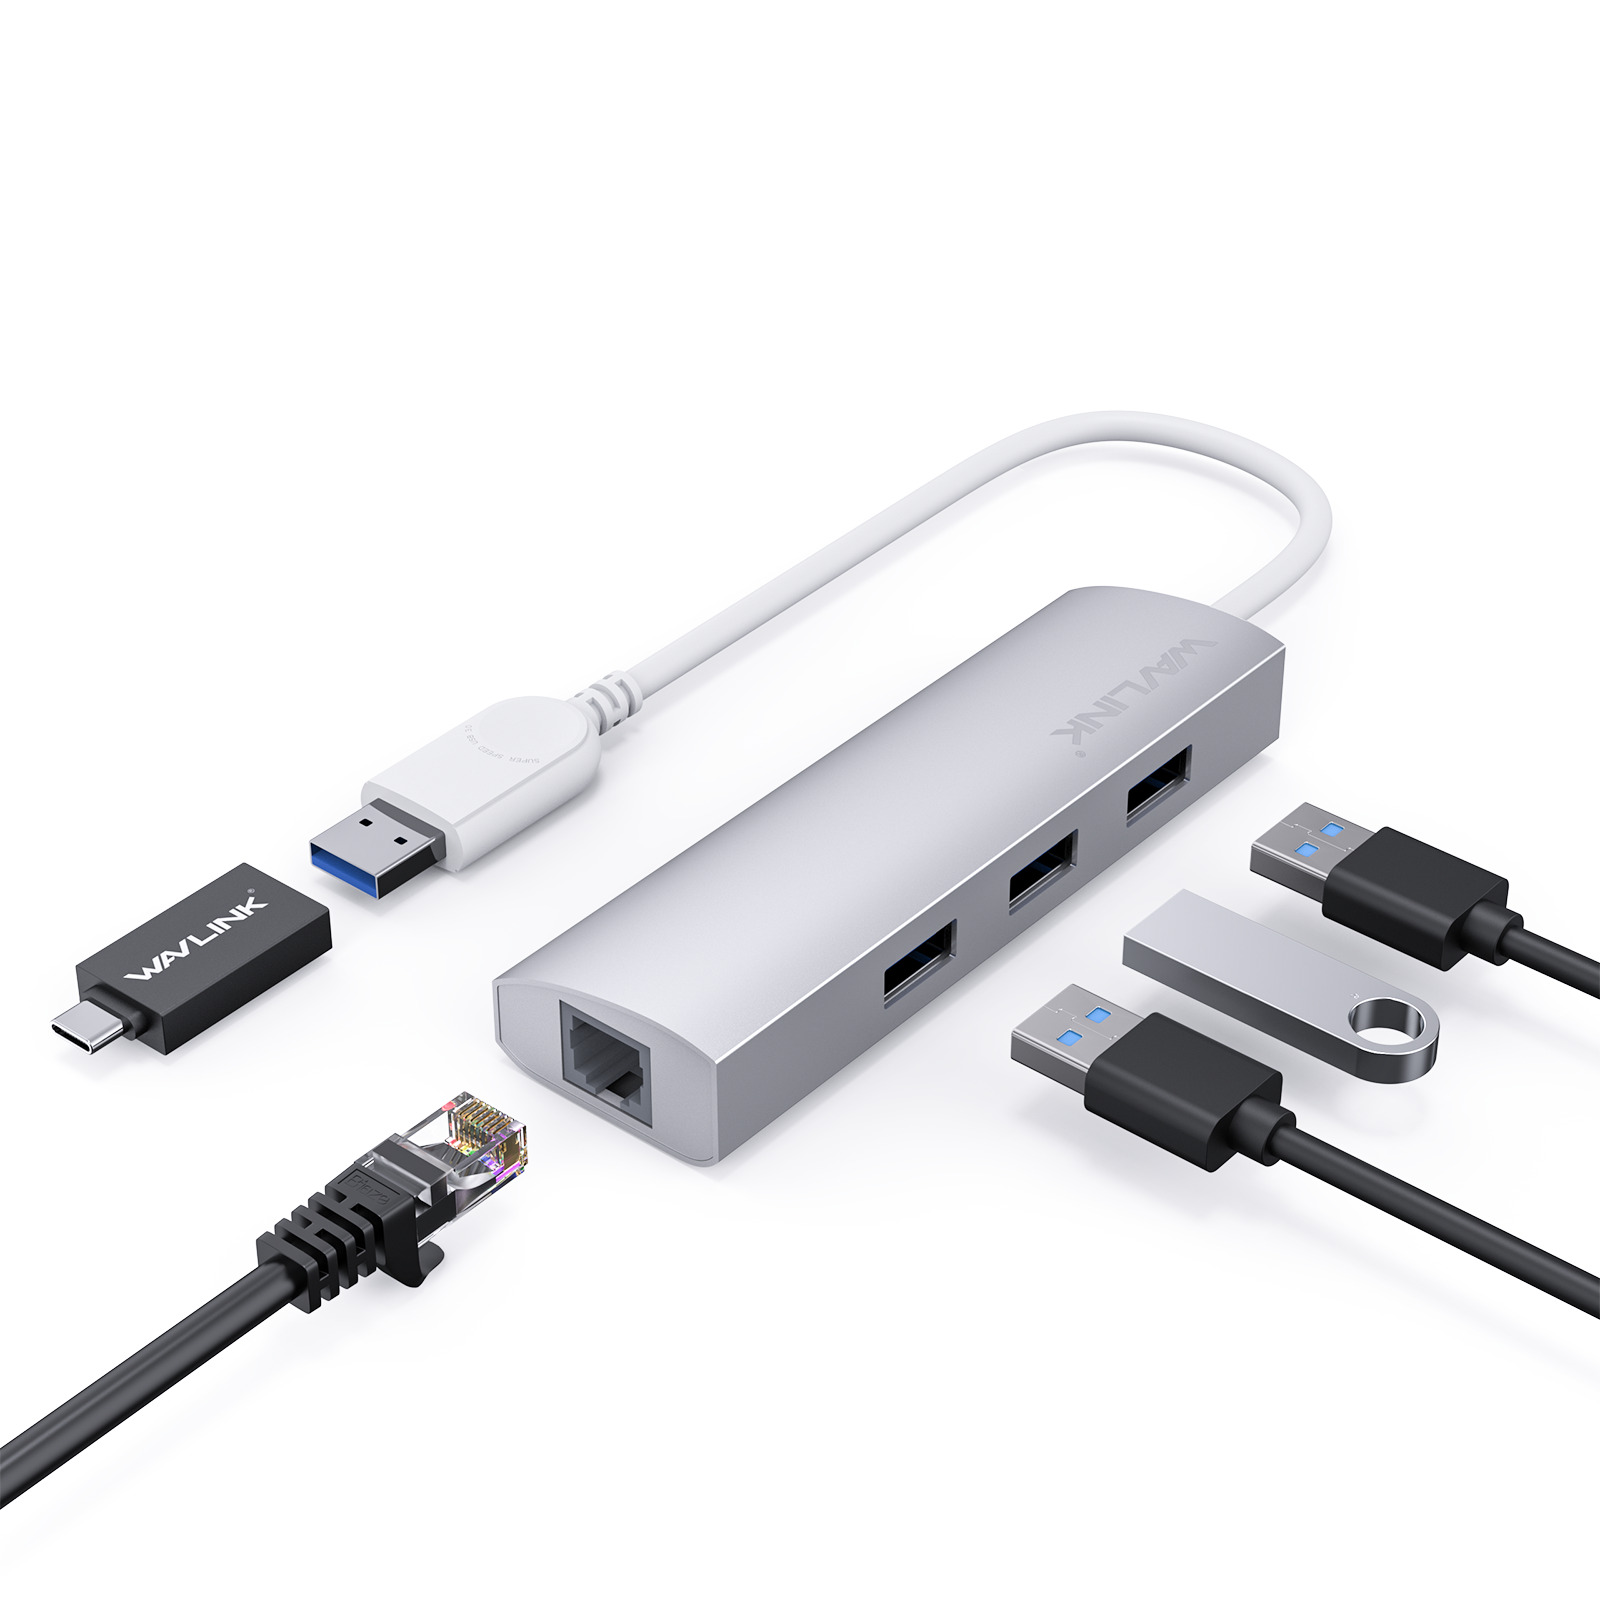 USB 3.0 4 Ports Hub Multiport Adapter w/Gigabit Ethernet for MacBook Surface Pro